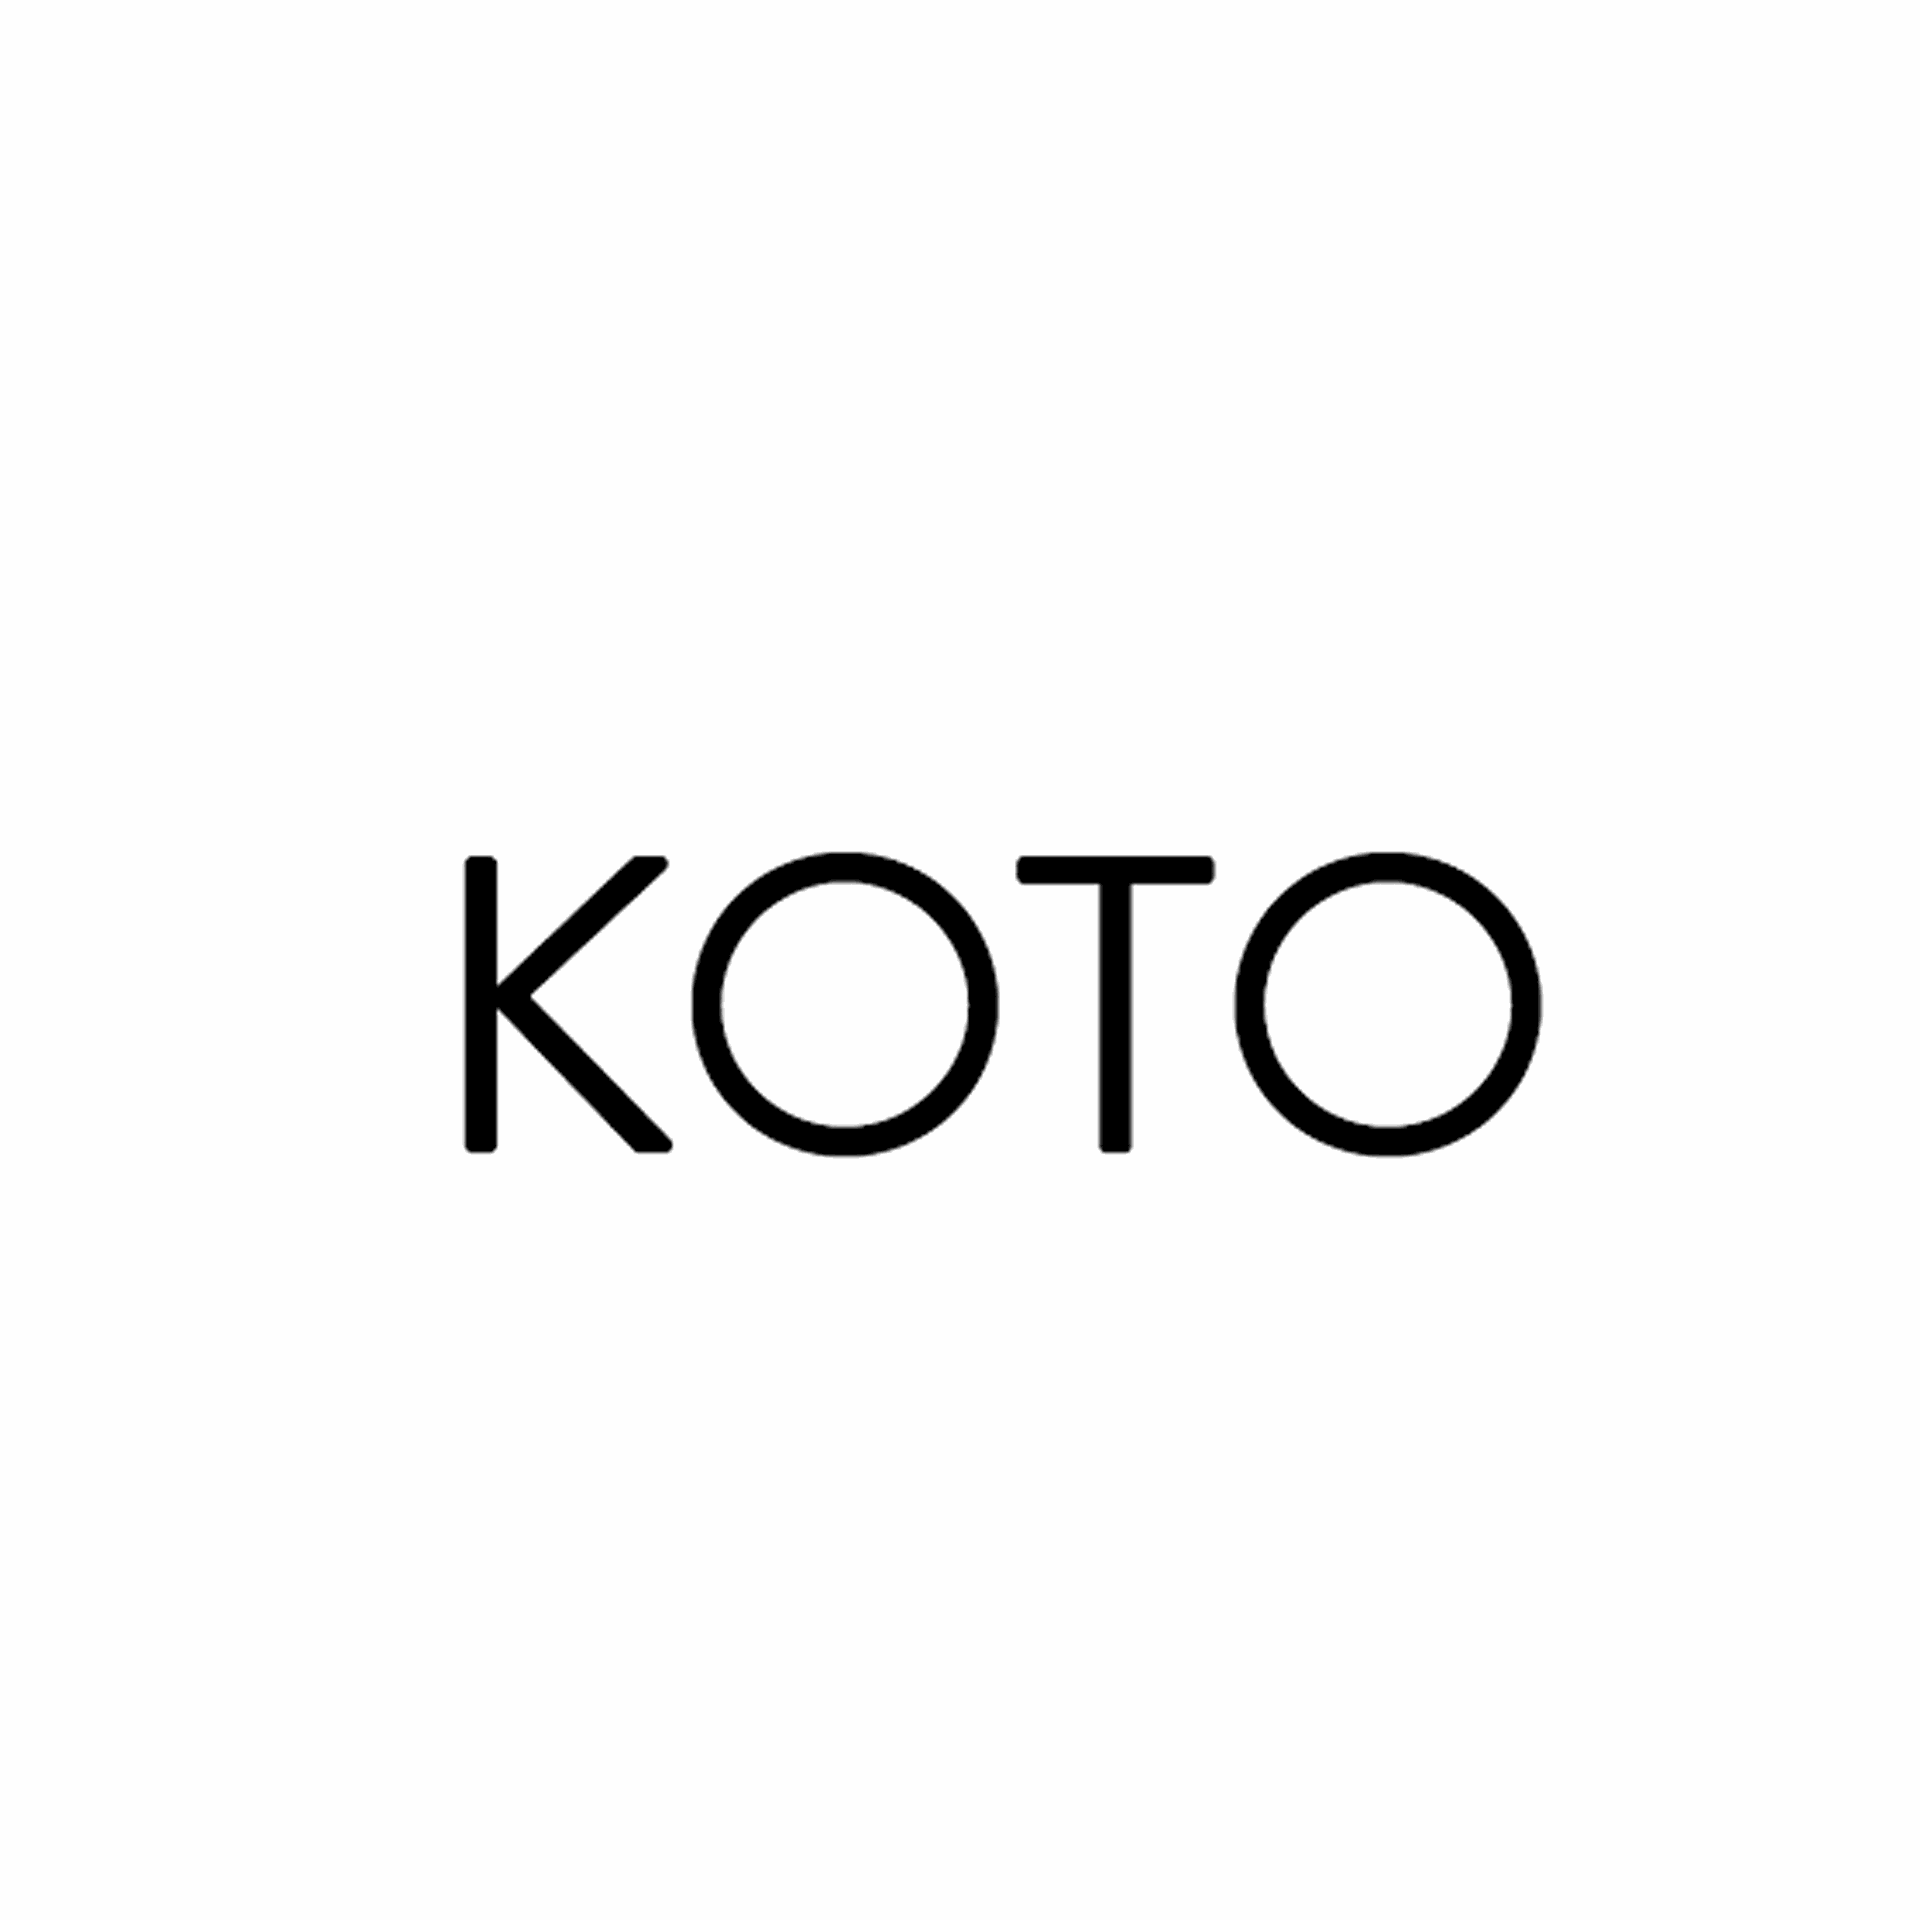 Product Brand: KOTO